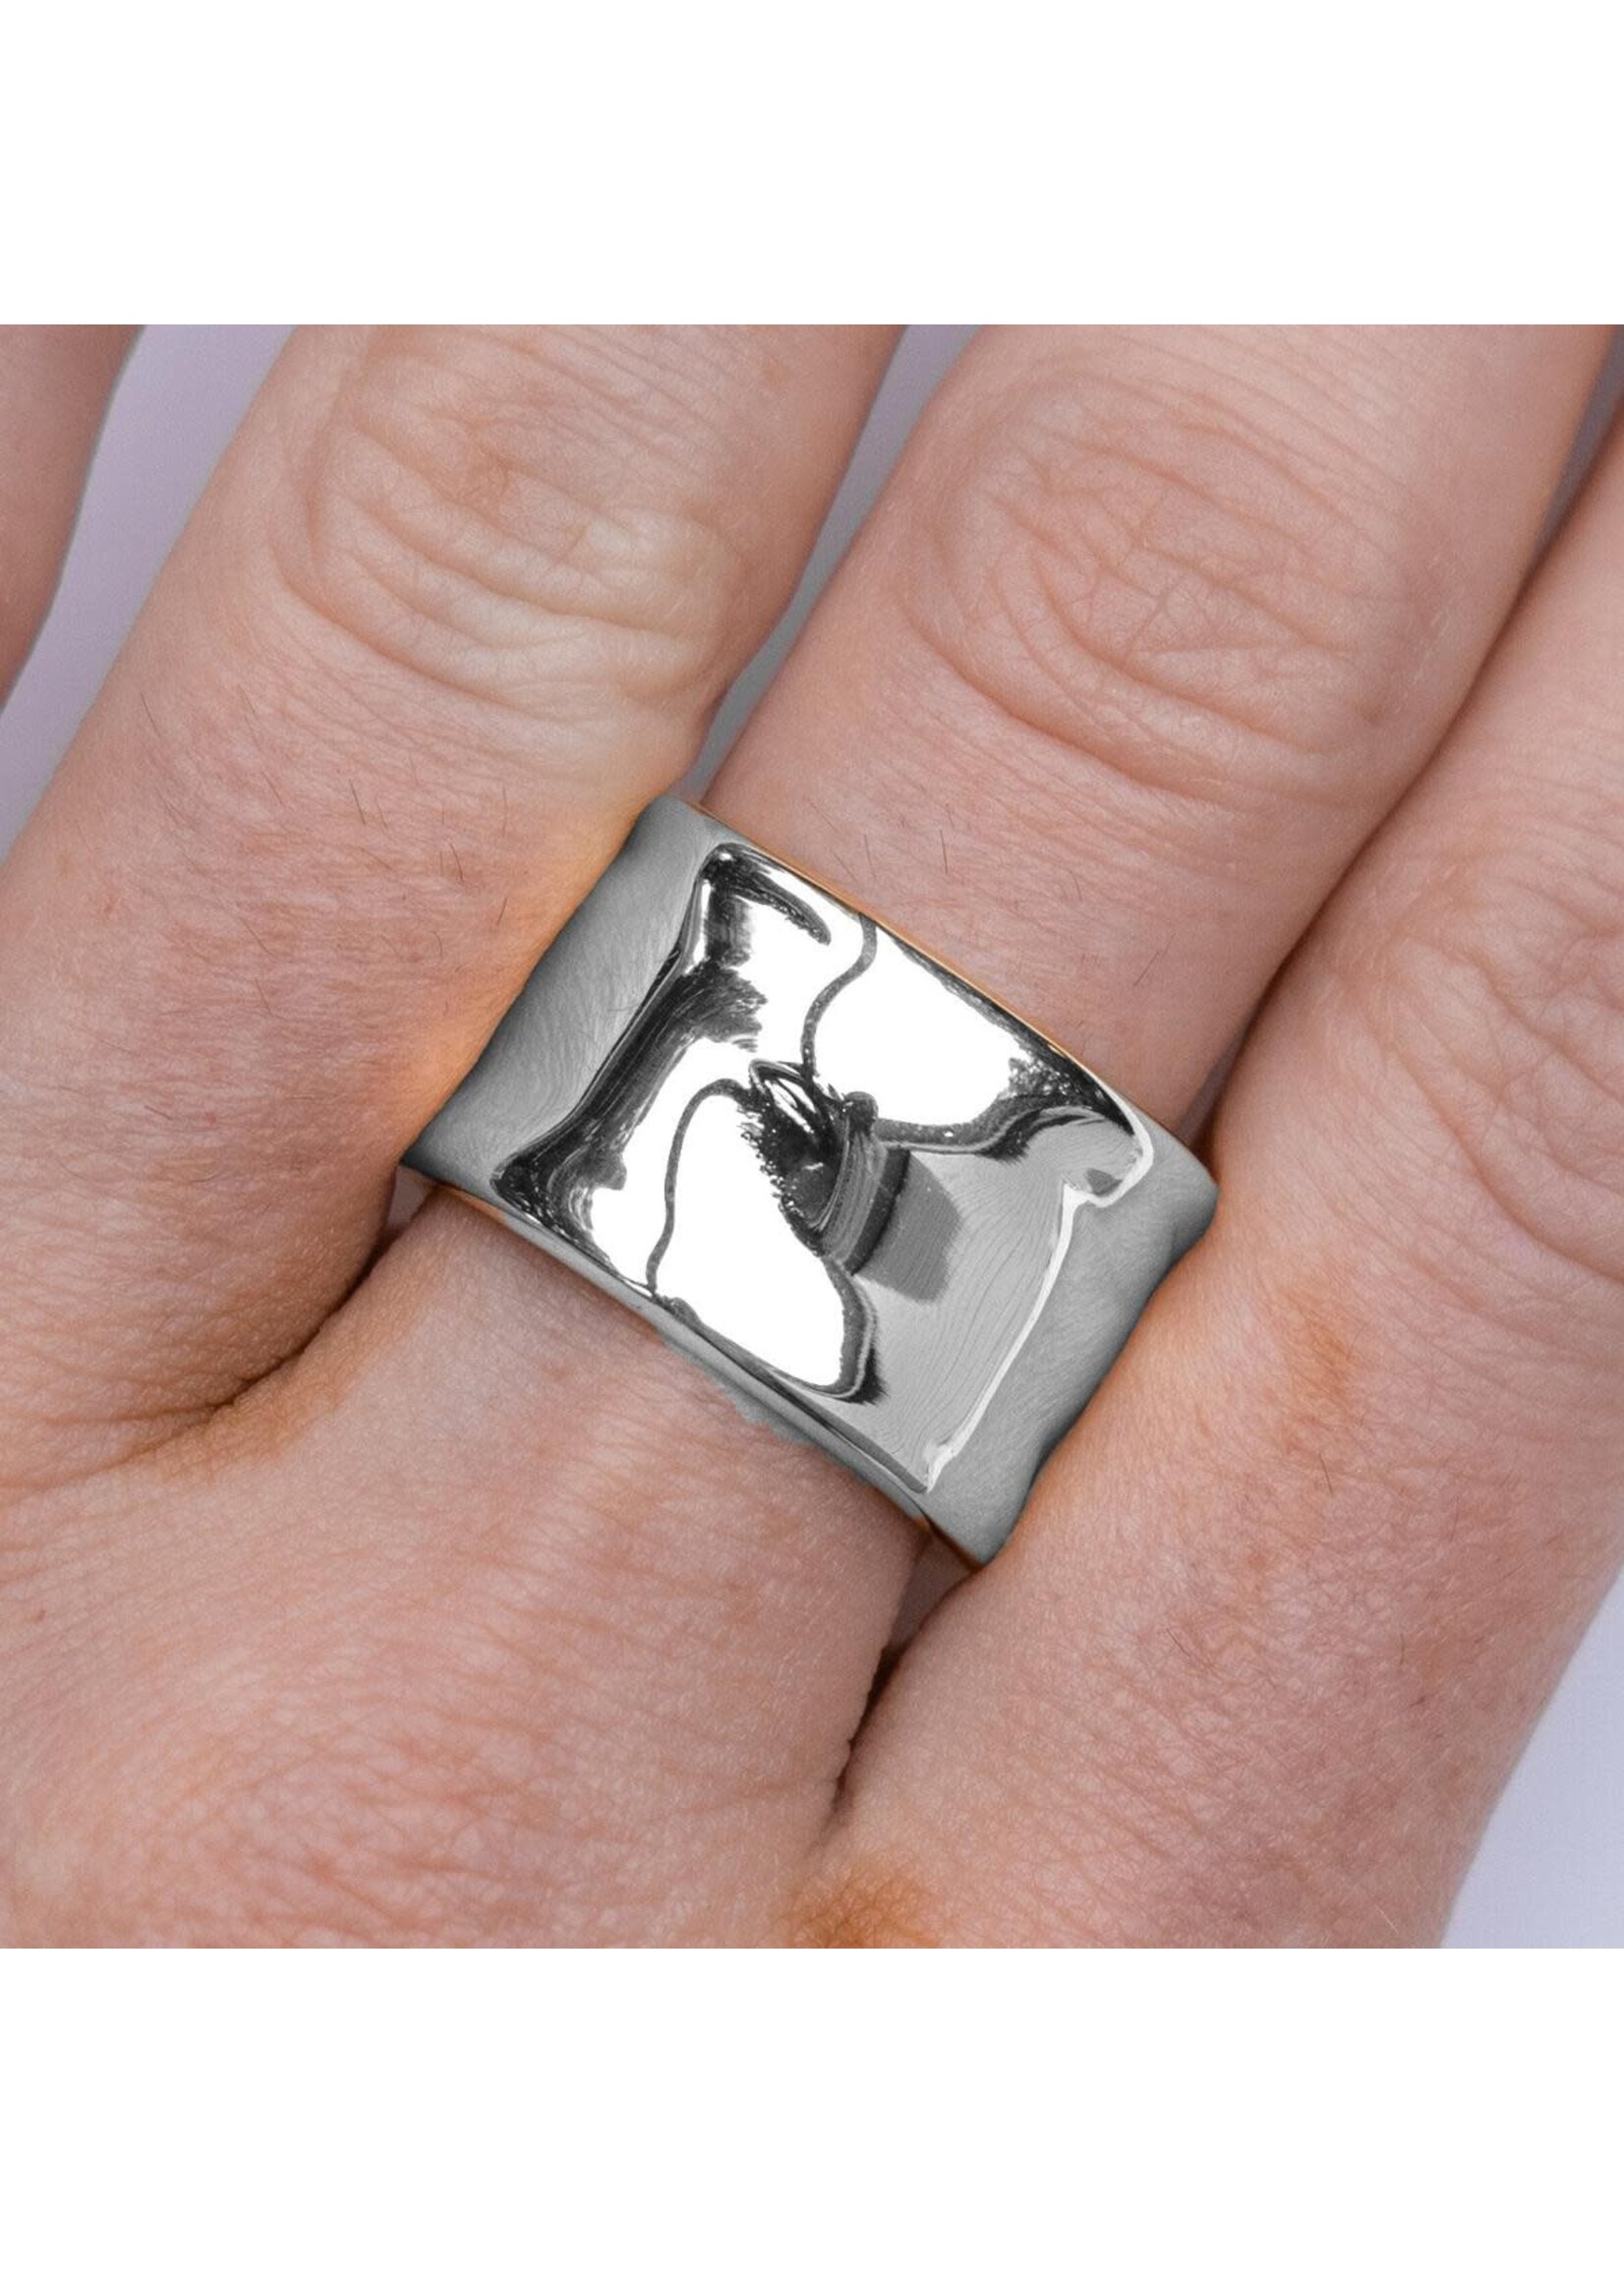 ALCO Jewelry Sedona Ring